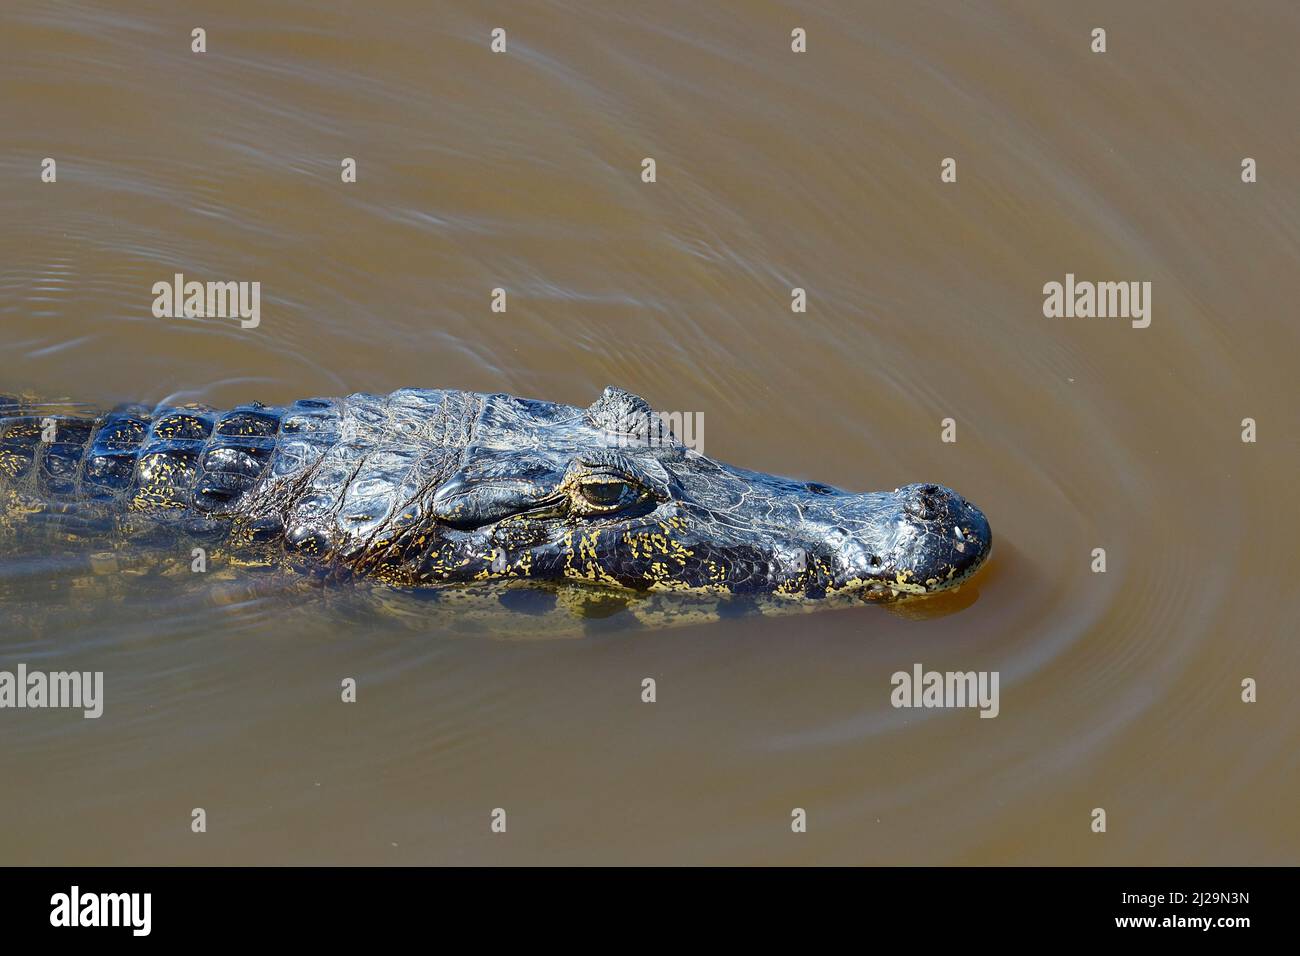 Yacare caiman (Caiman yacare) swimming in murky water, portrait, Pantanal, Mato Grosso, Brazil Stock Photo